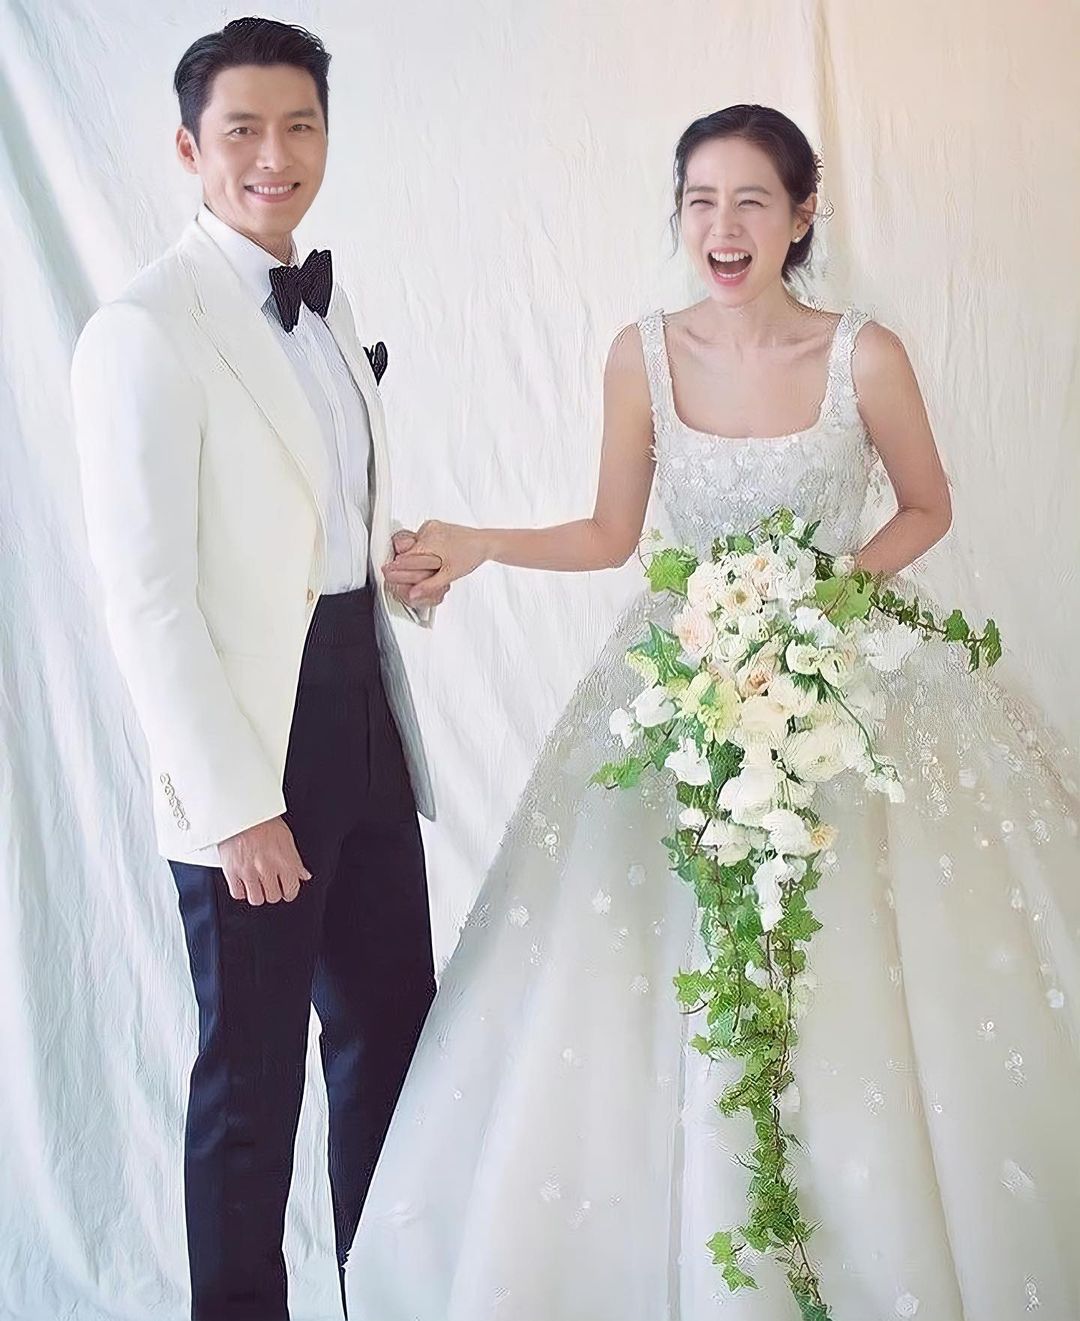 Son Ye Jin wears Elie Saab wedding dress in wedding photos